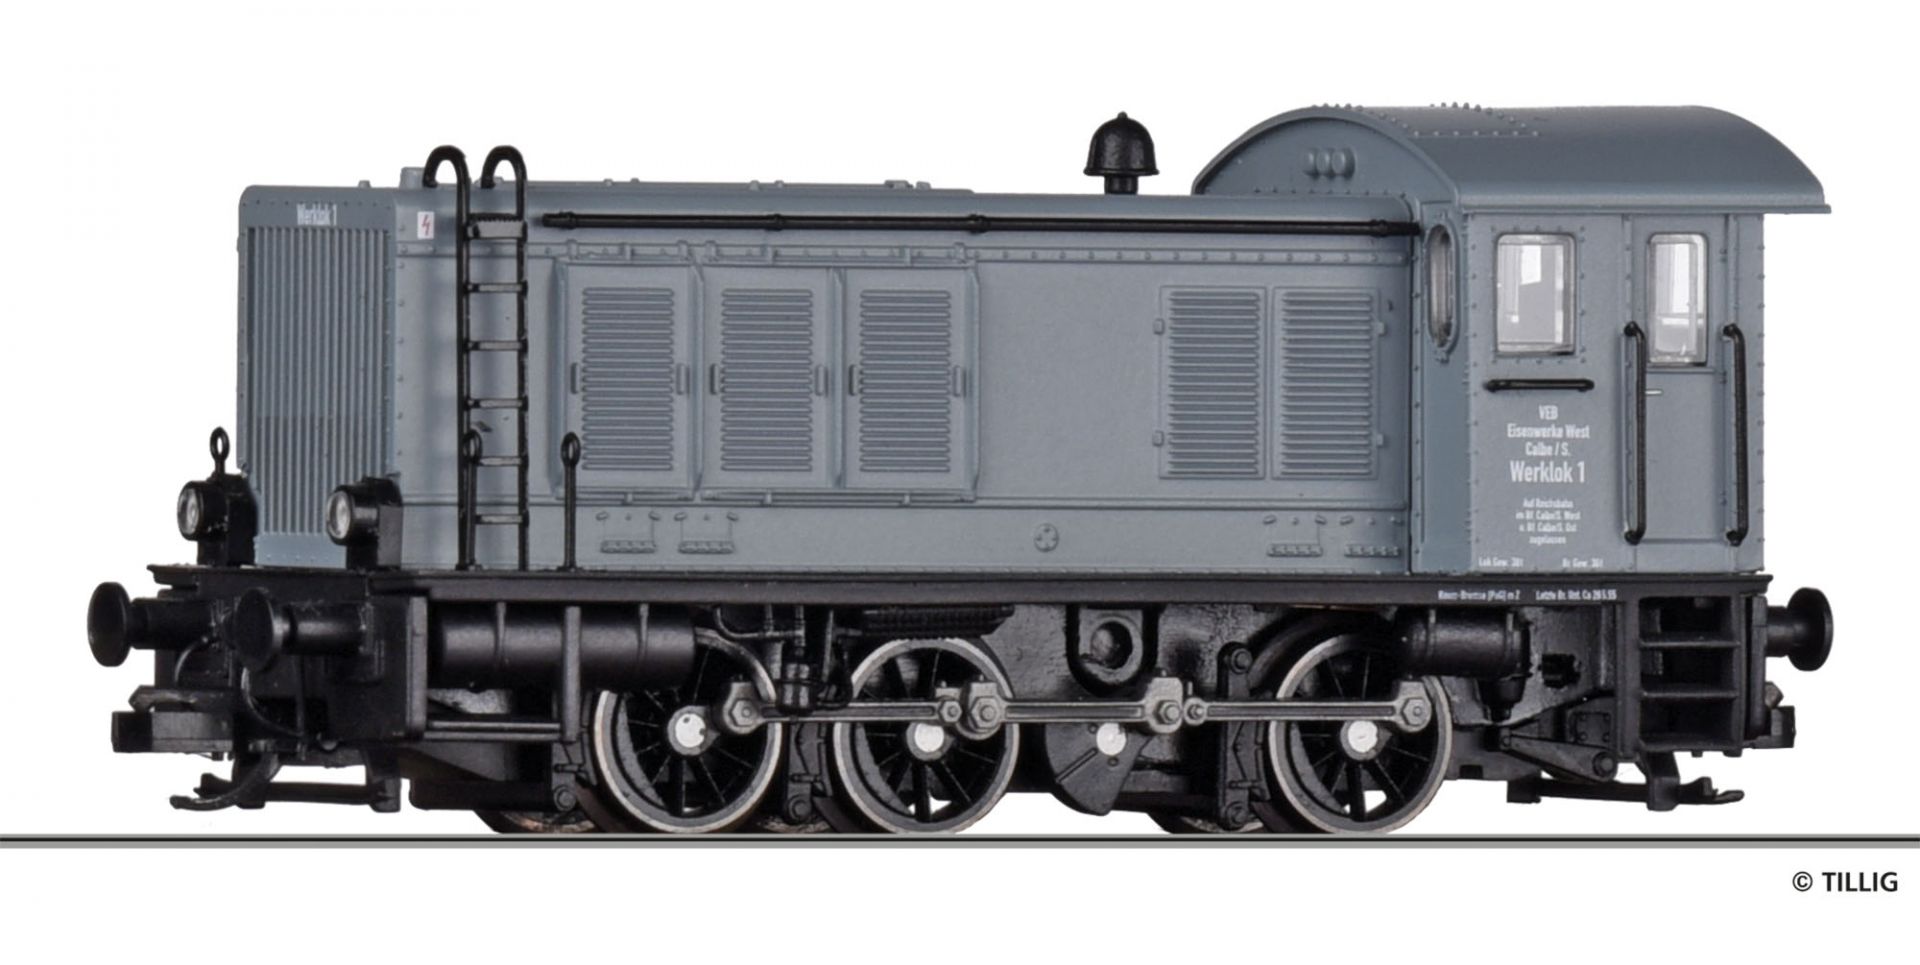 502407 | Diesel locomotive -sold out-